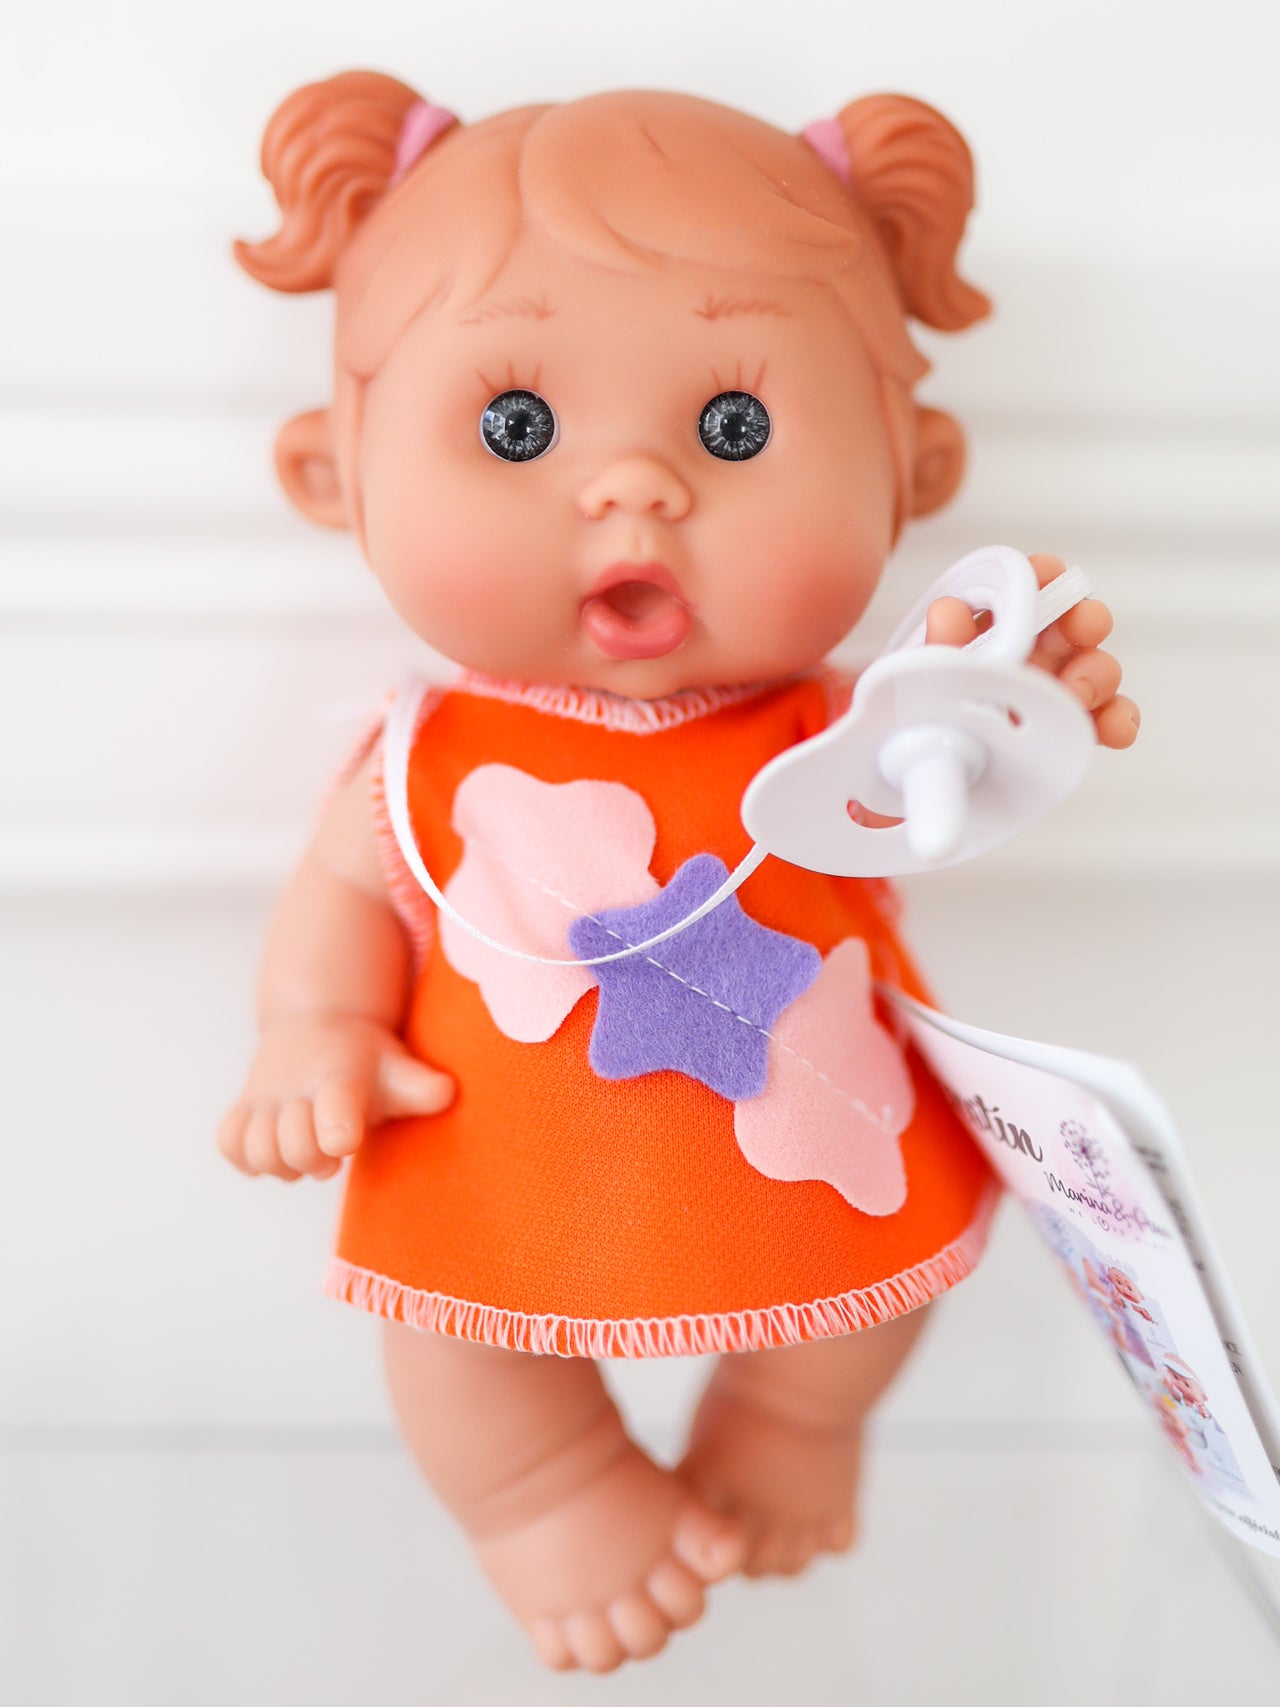 Lia - 8.2" Nenotin Girl Doll with Orange Dress